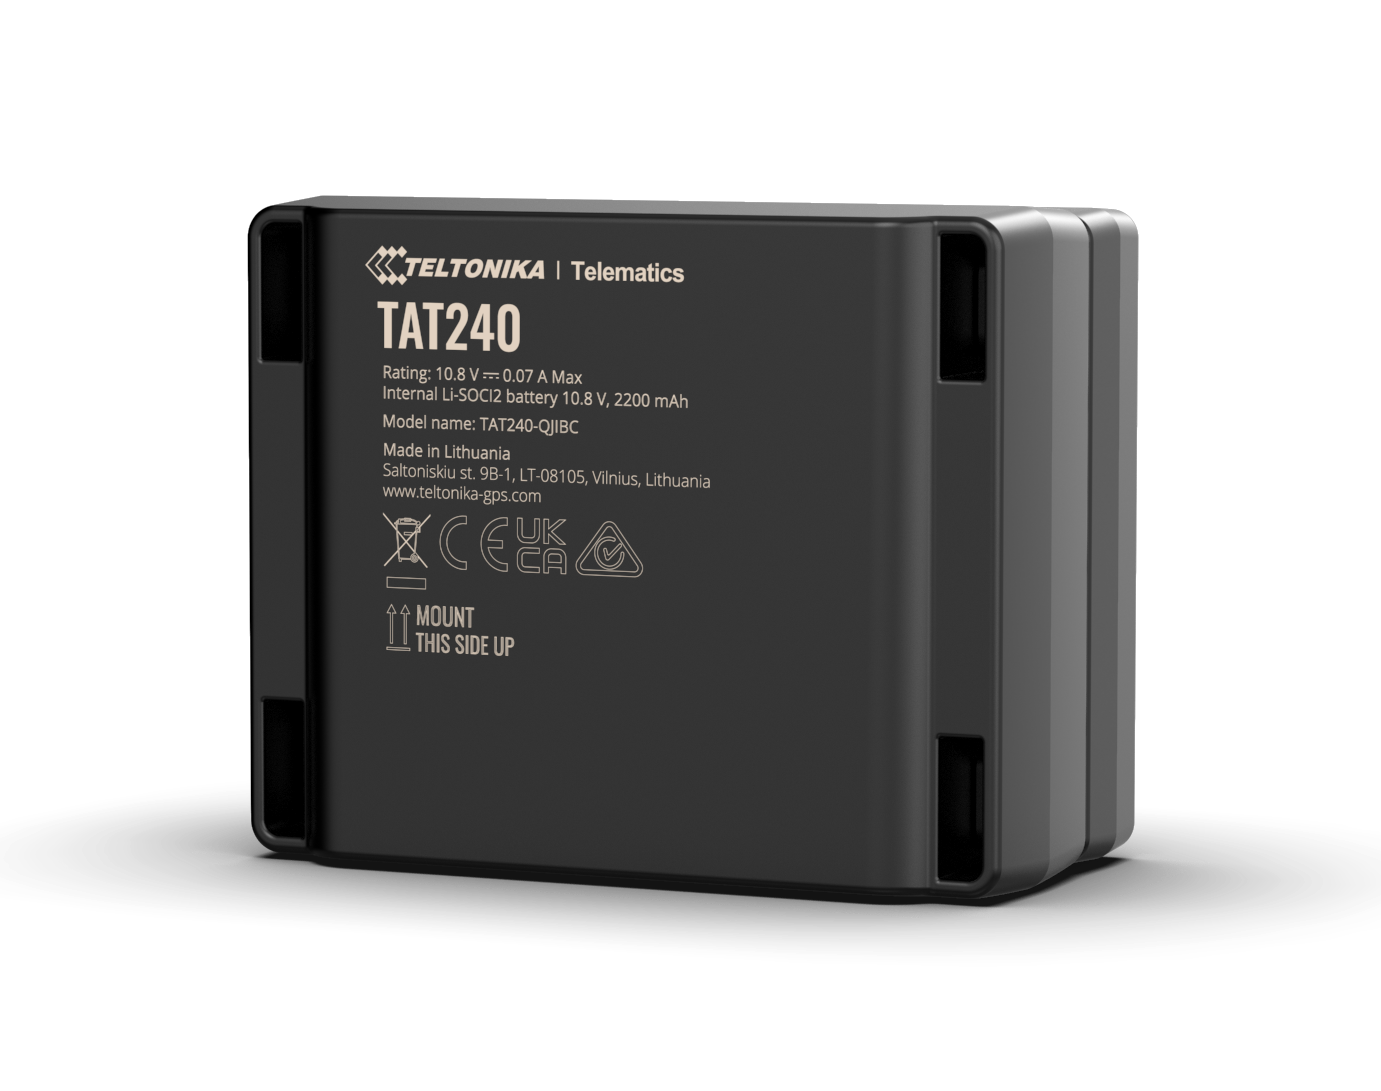 Teltonika's TAT240 asset tracker is integrated with GpsGate's fleet management software